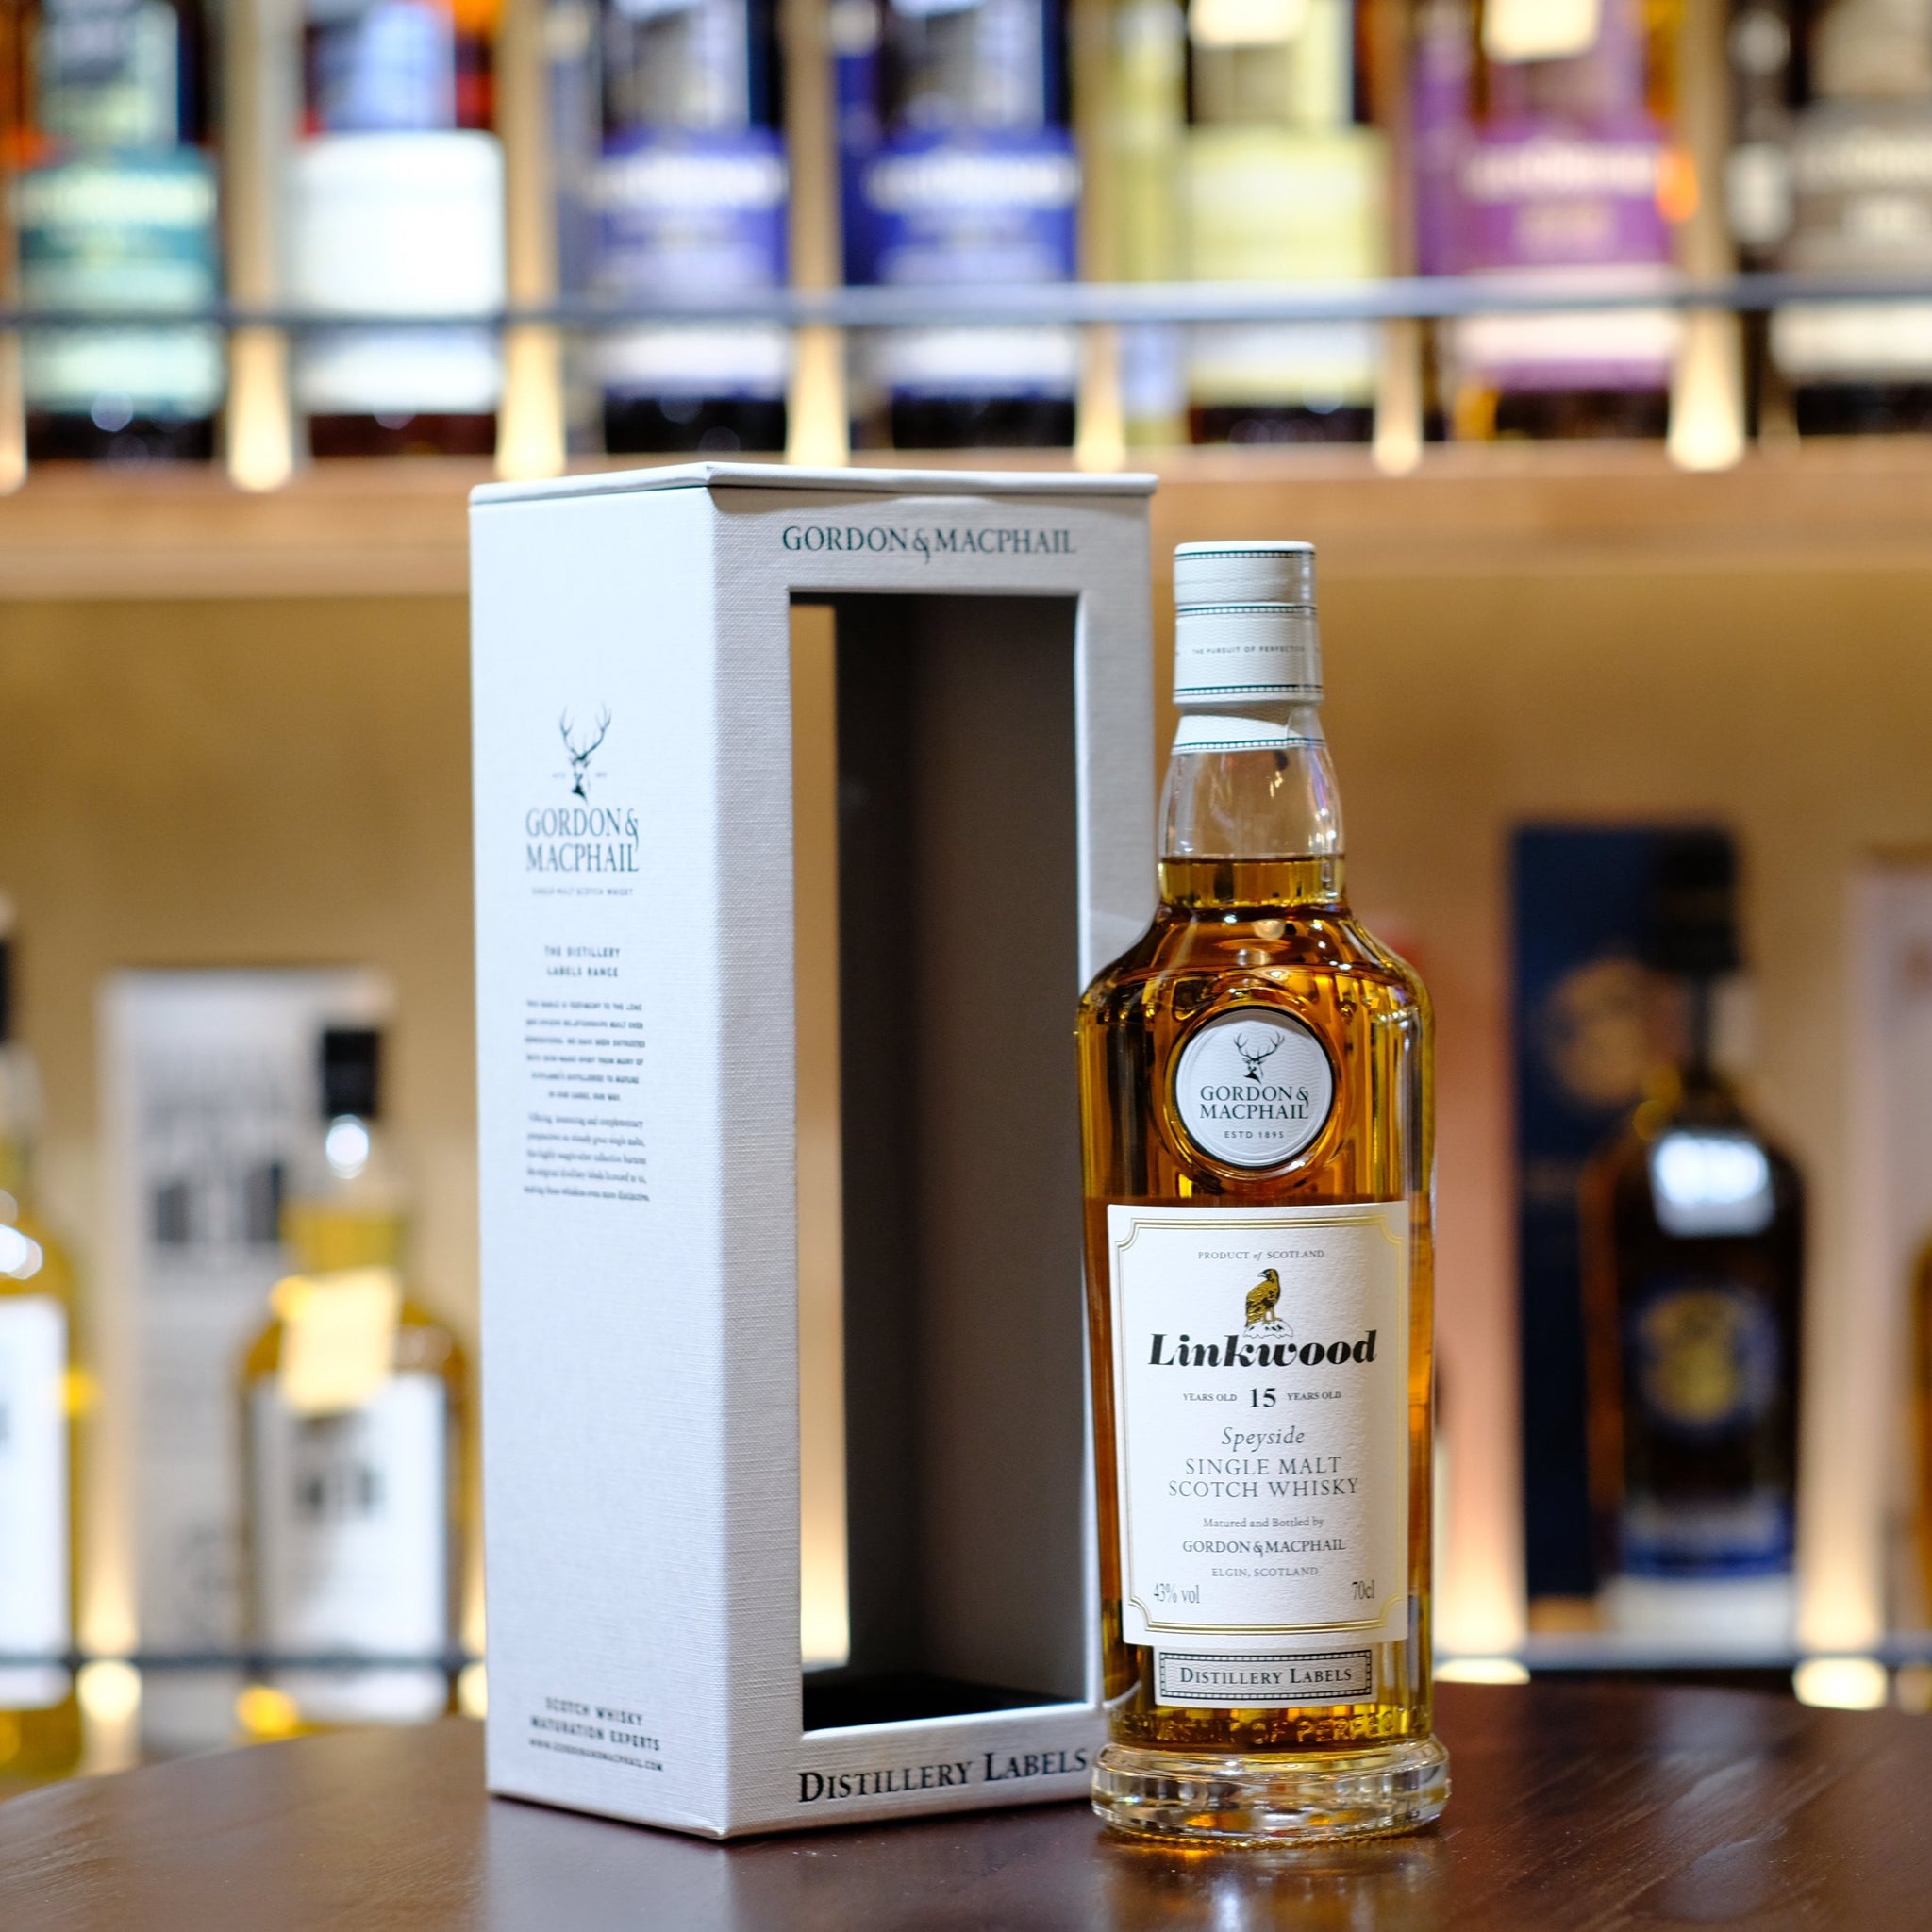 Linkwood 15 Year Old by Gordon & Macphail Distillery Labels Single Malt Scotch Whisky